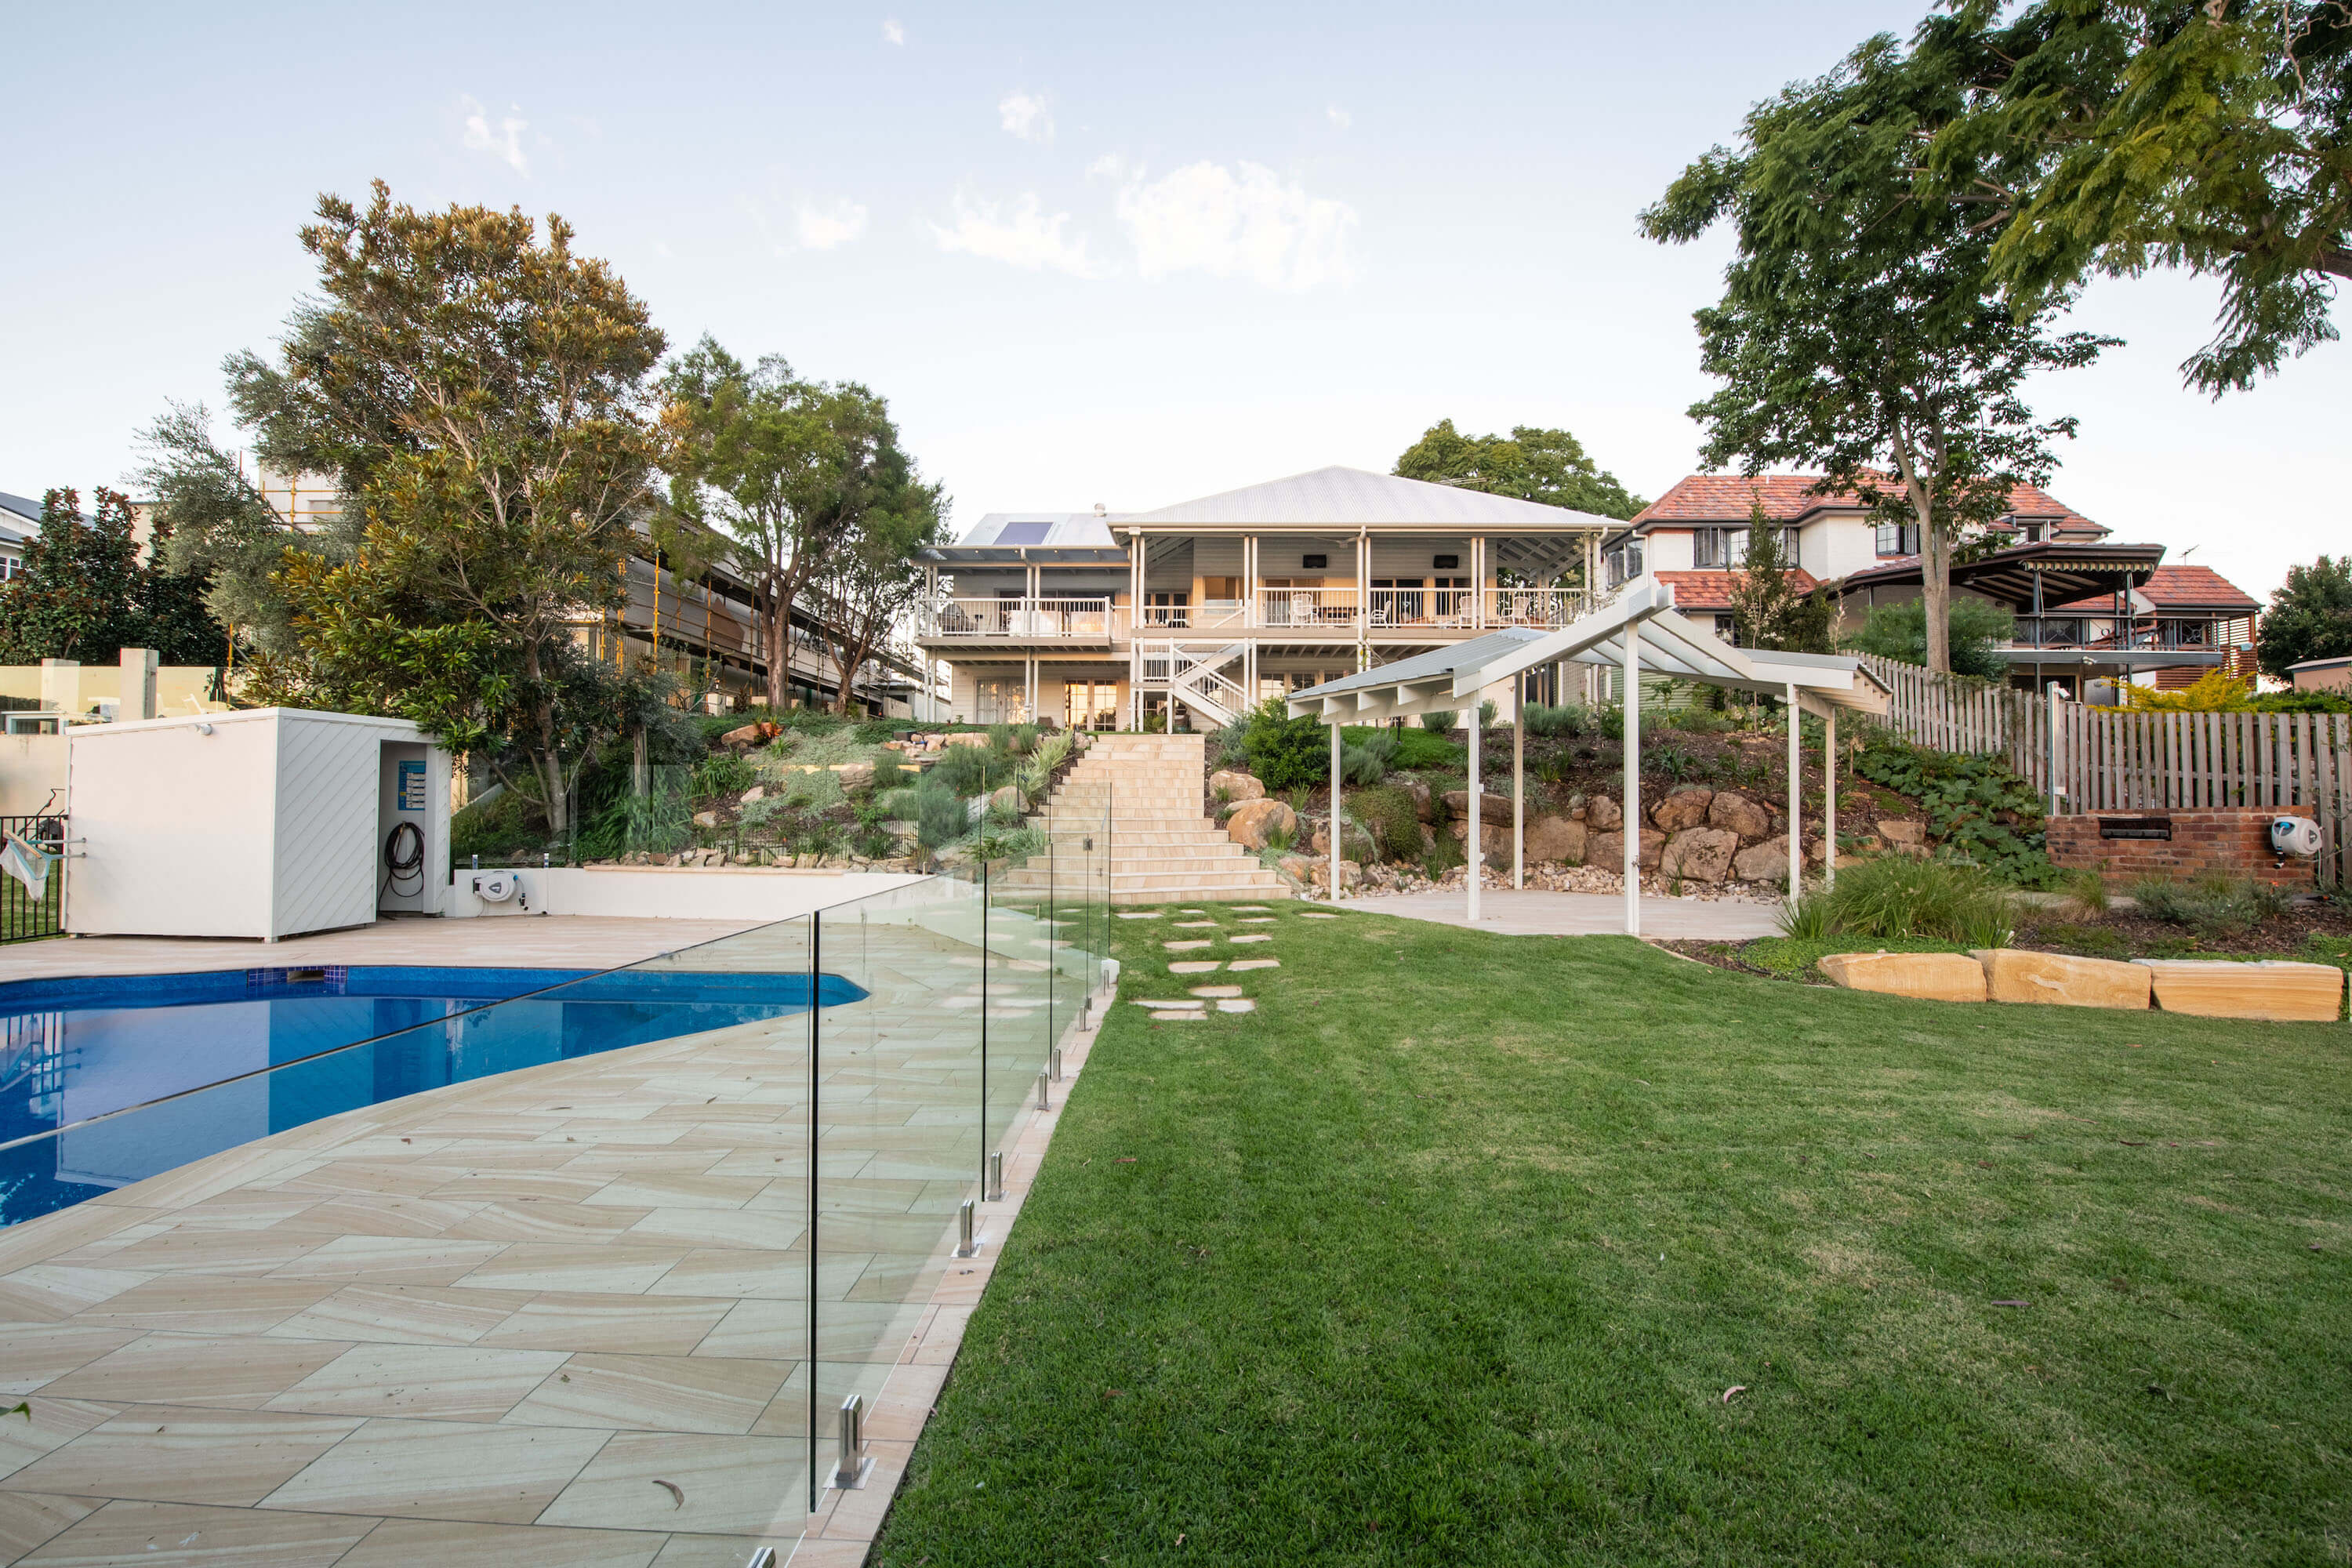 Vast landscaped area with pool and pergola below Queenslander home